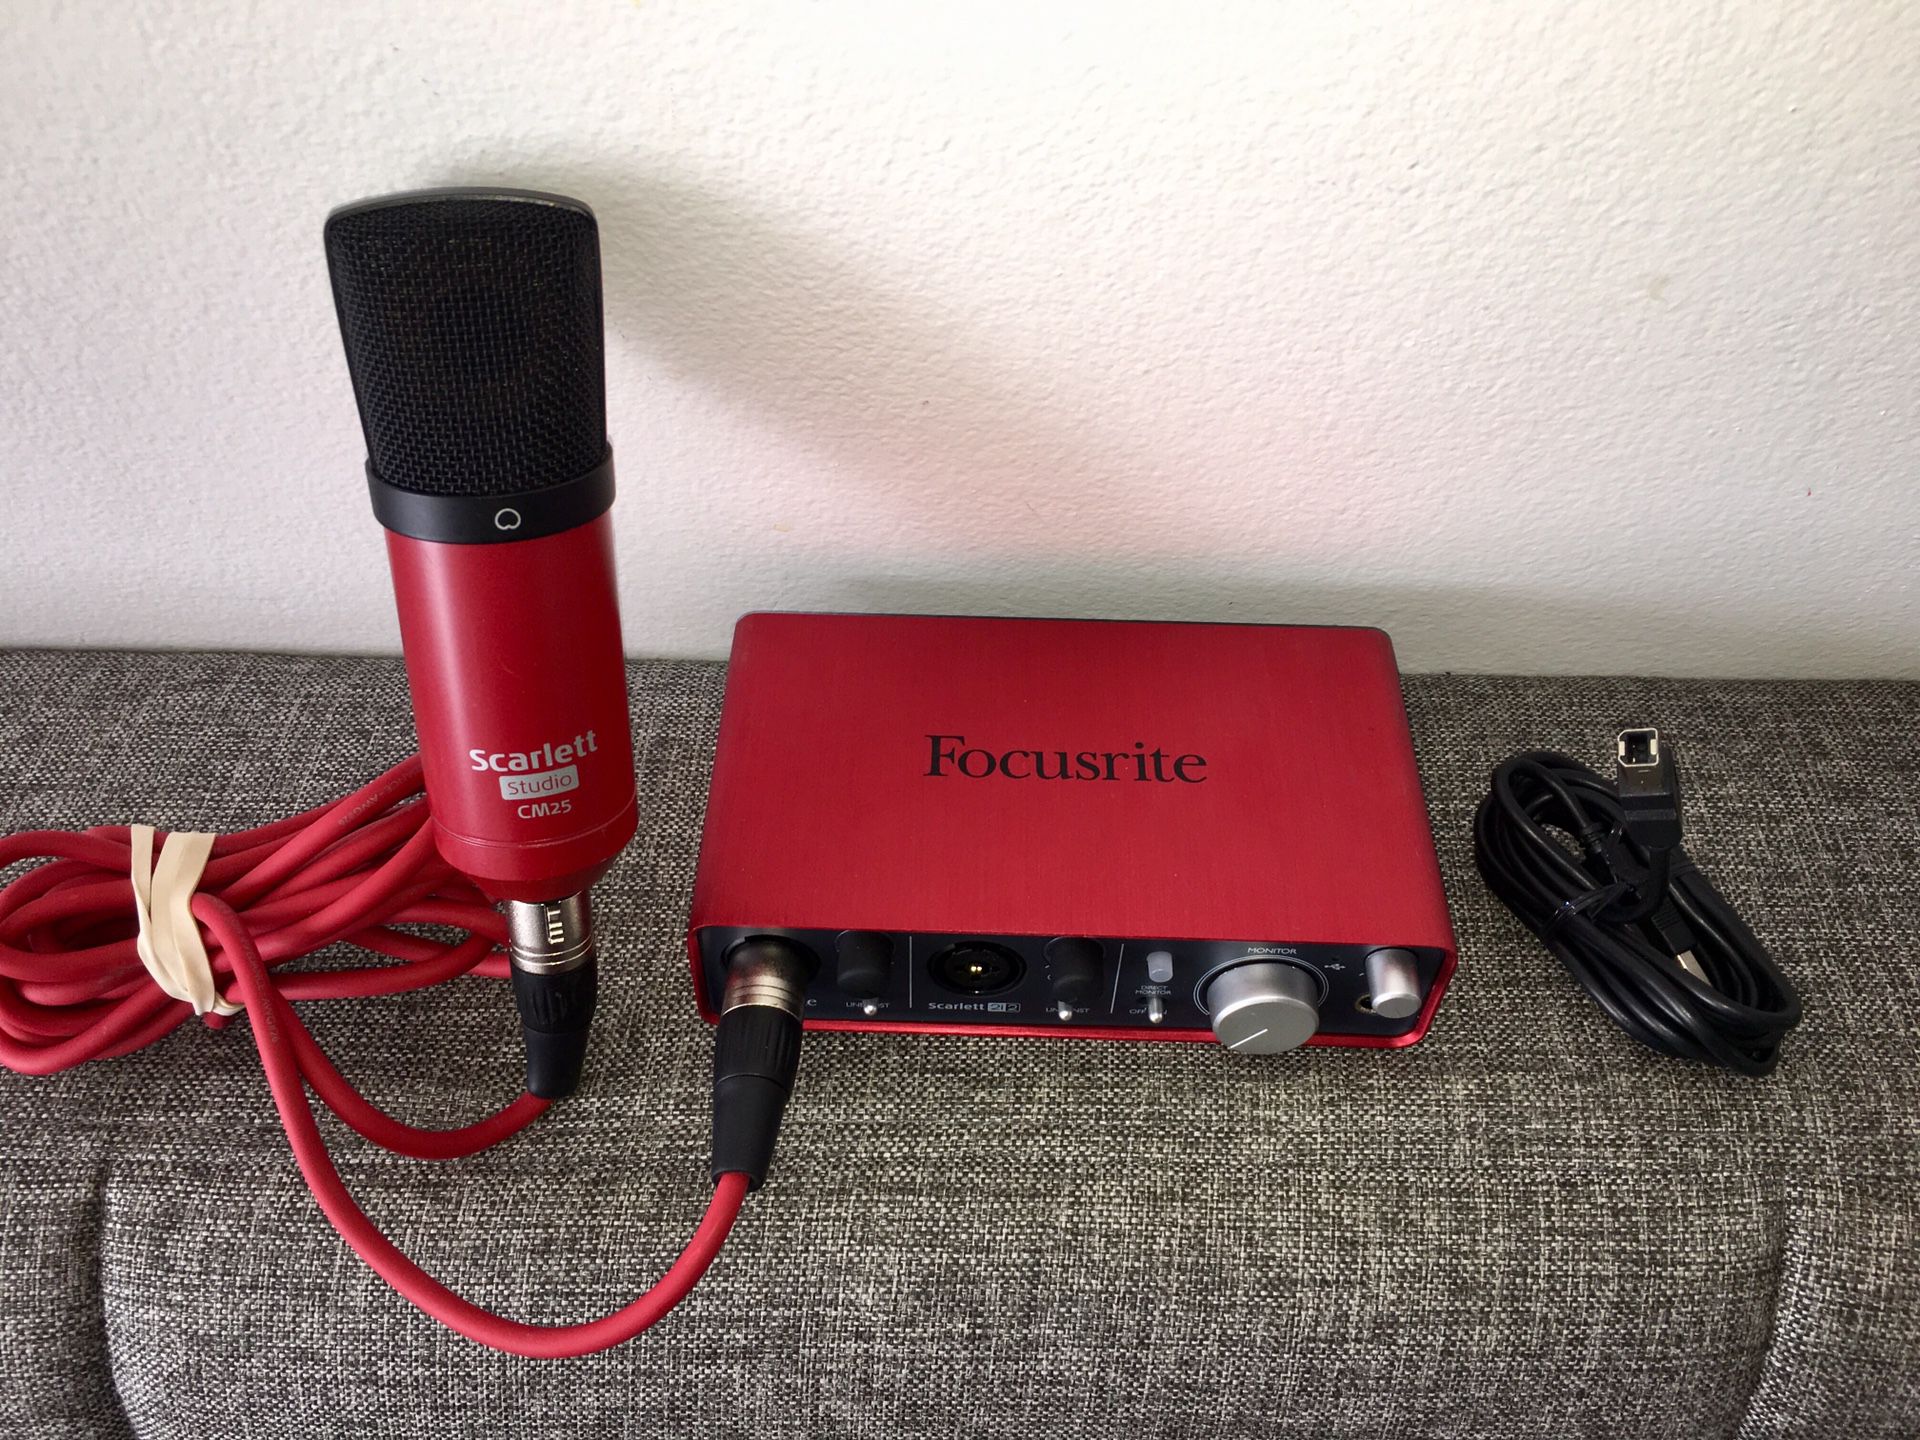 Focusrite Scarlett 2i2 USB Audio Interface with Studio microphone pick up loc skokie IL no software